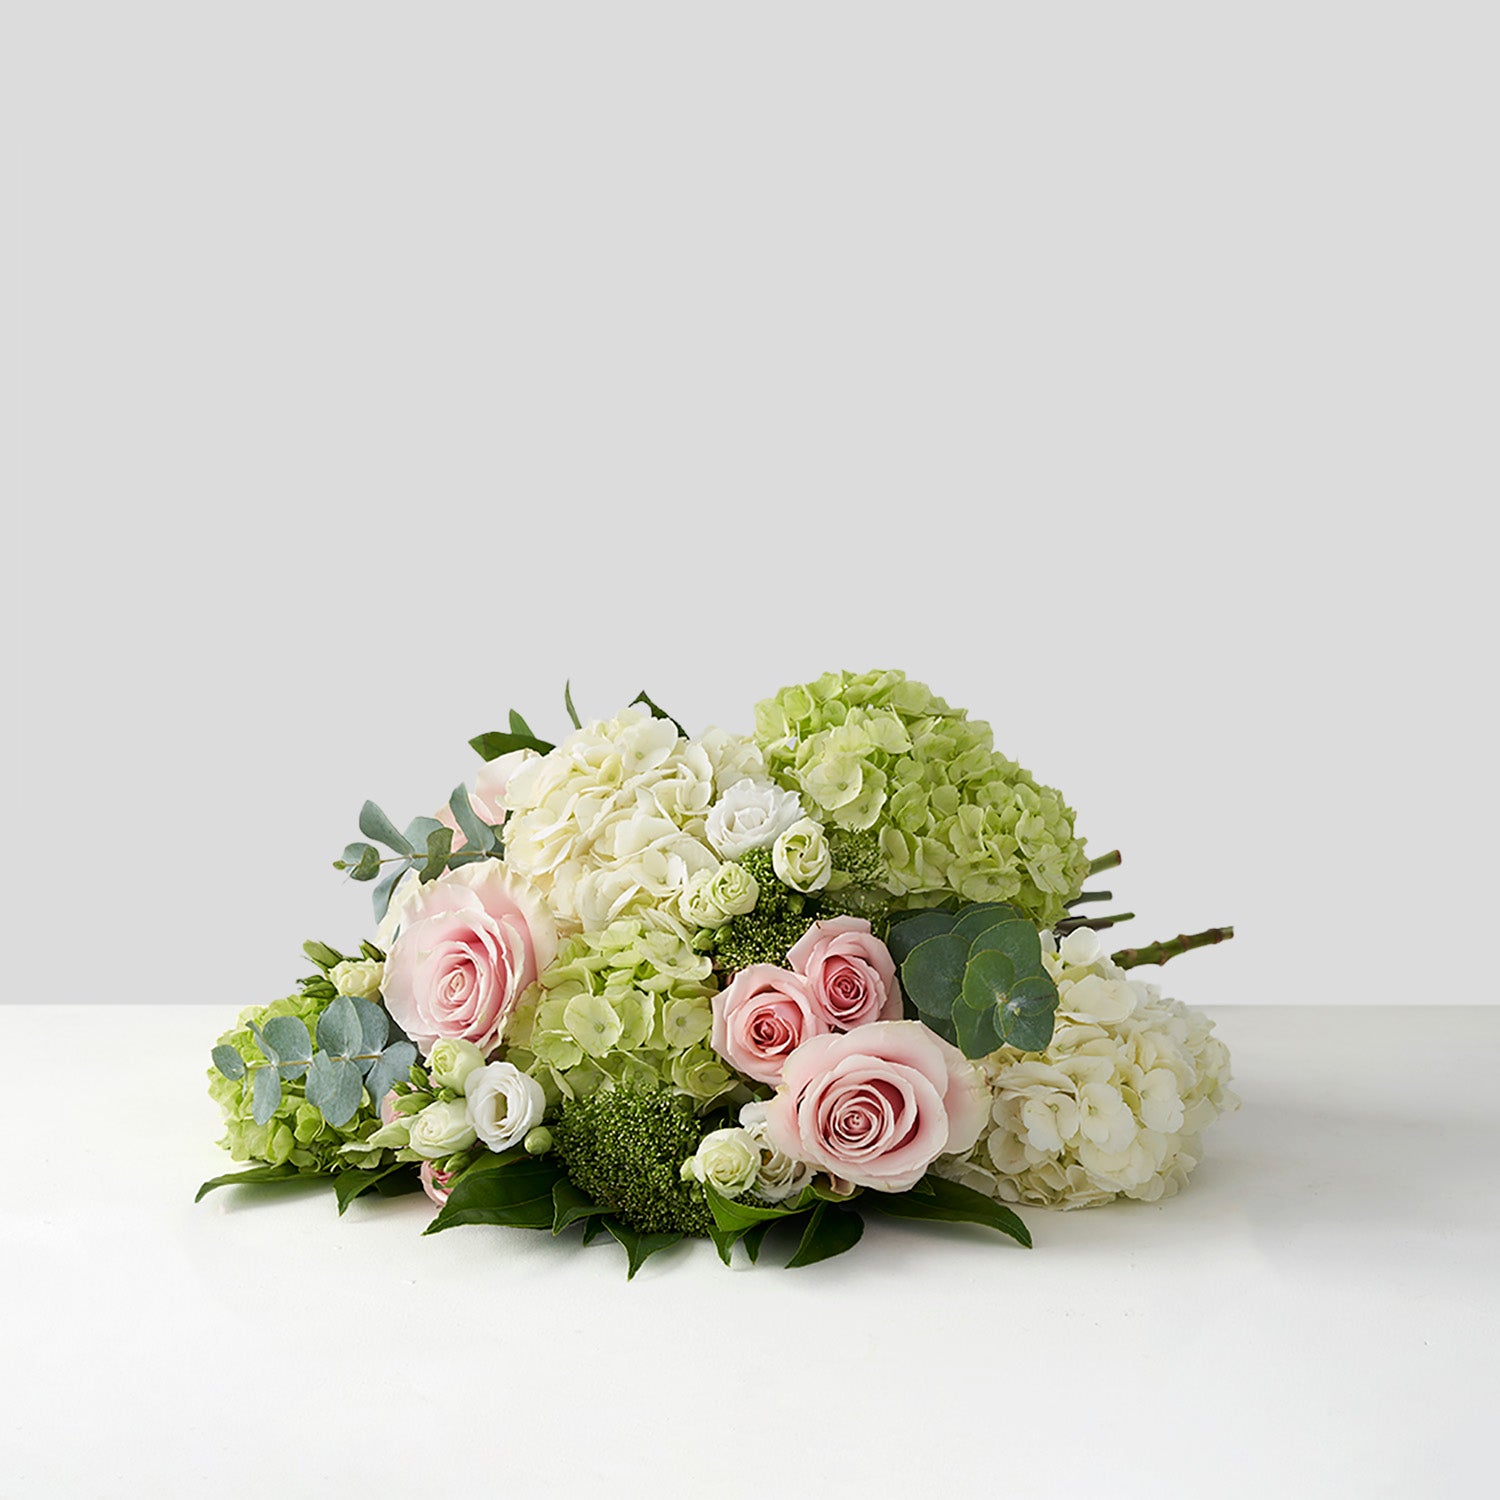 Bouquet of pink Mondial roses, green hydrangea, white lisianthus and eucalyptus on white background.